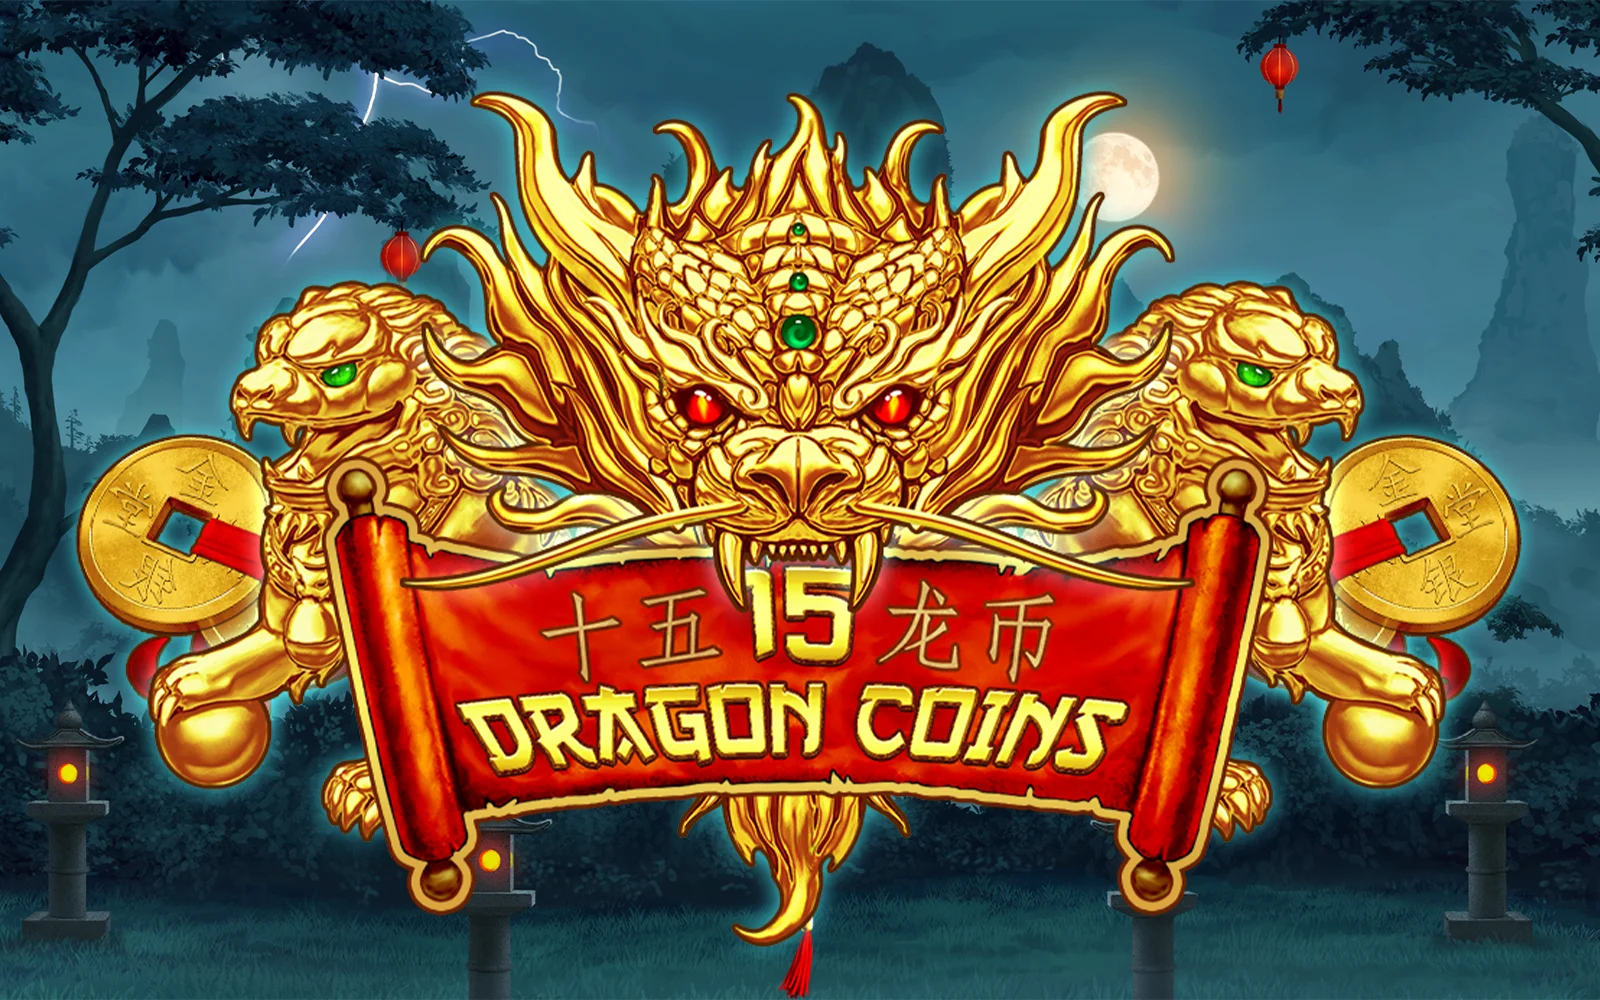 Играйте в 15 Dragon Coins в онлайн-казино Starcasino.be